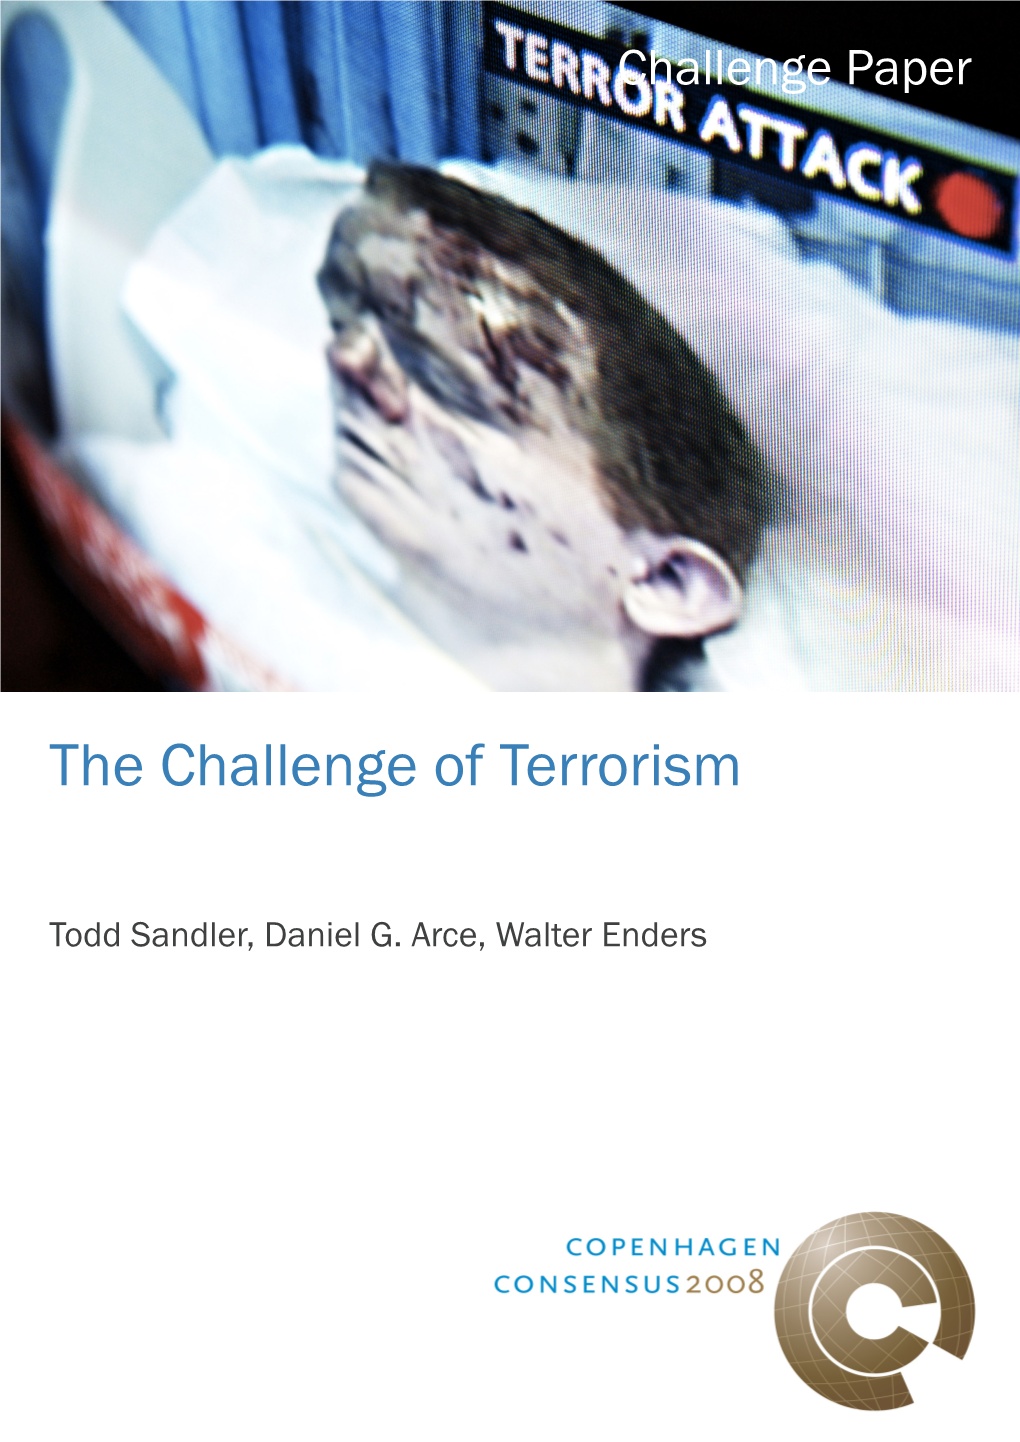 The Challenge of Terrorism